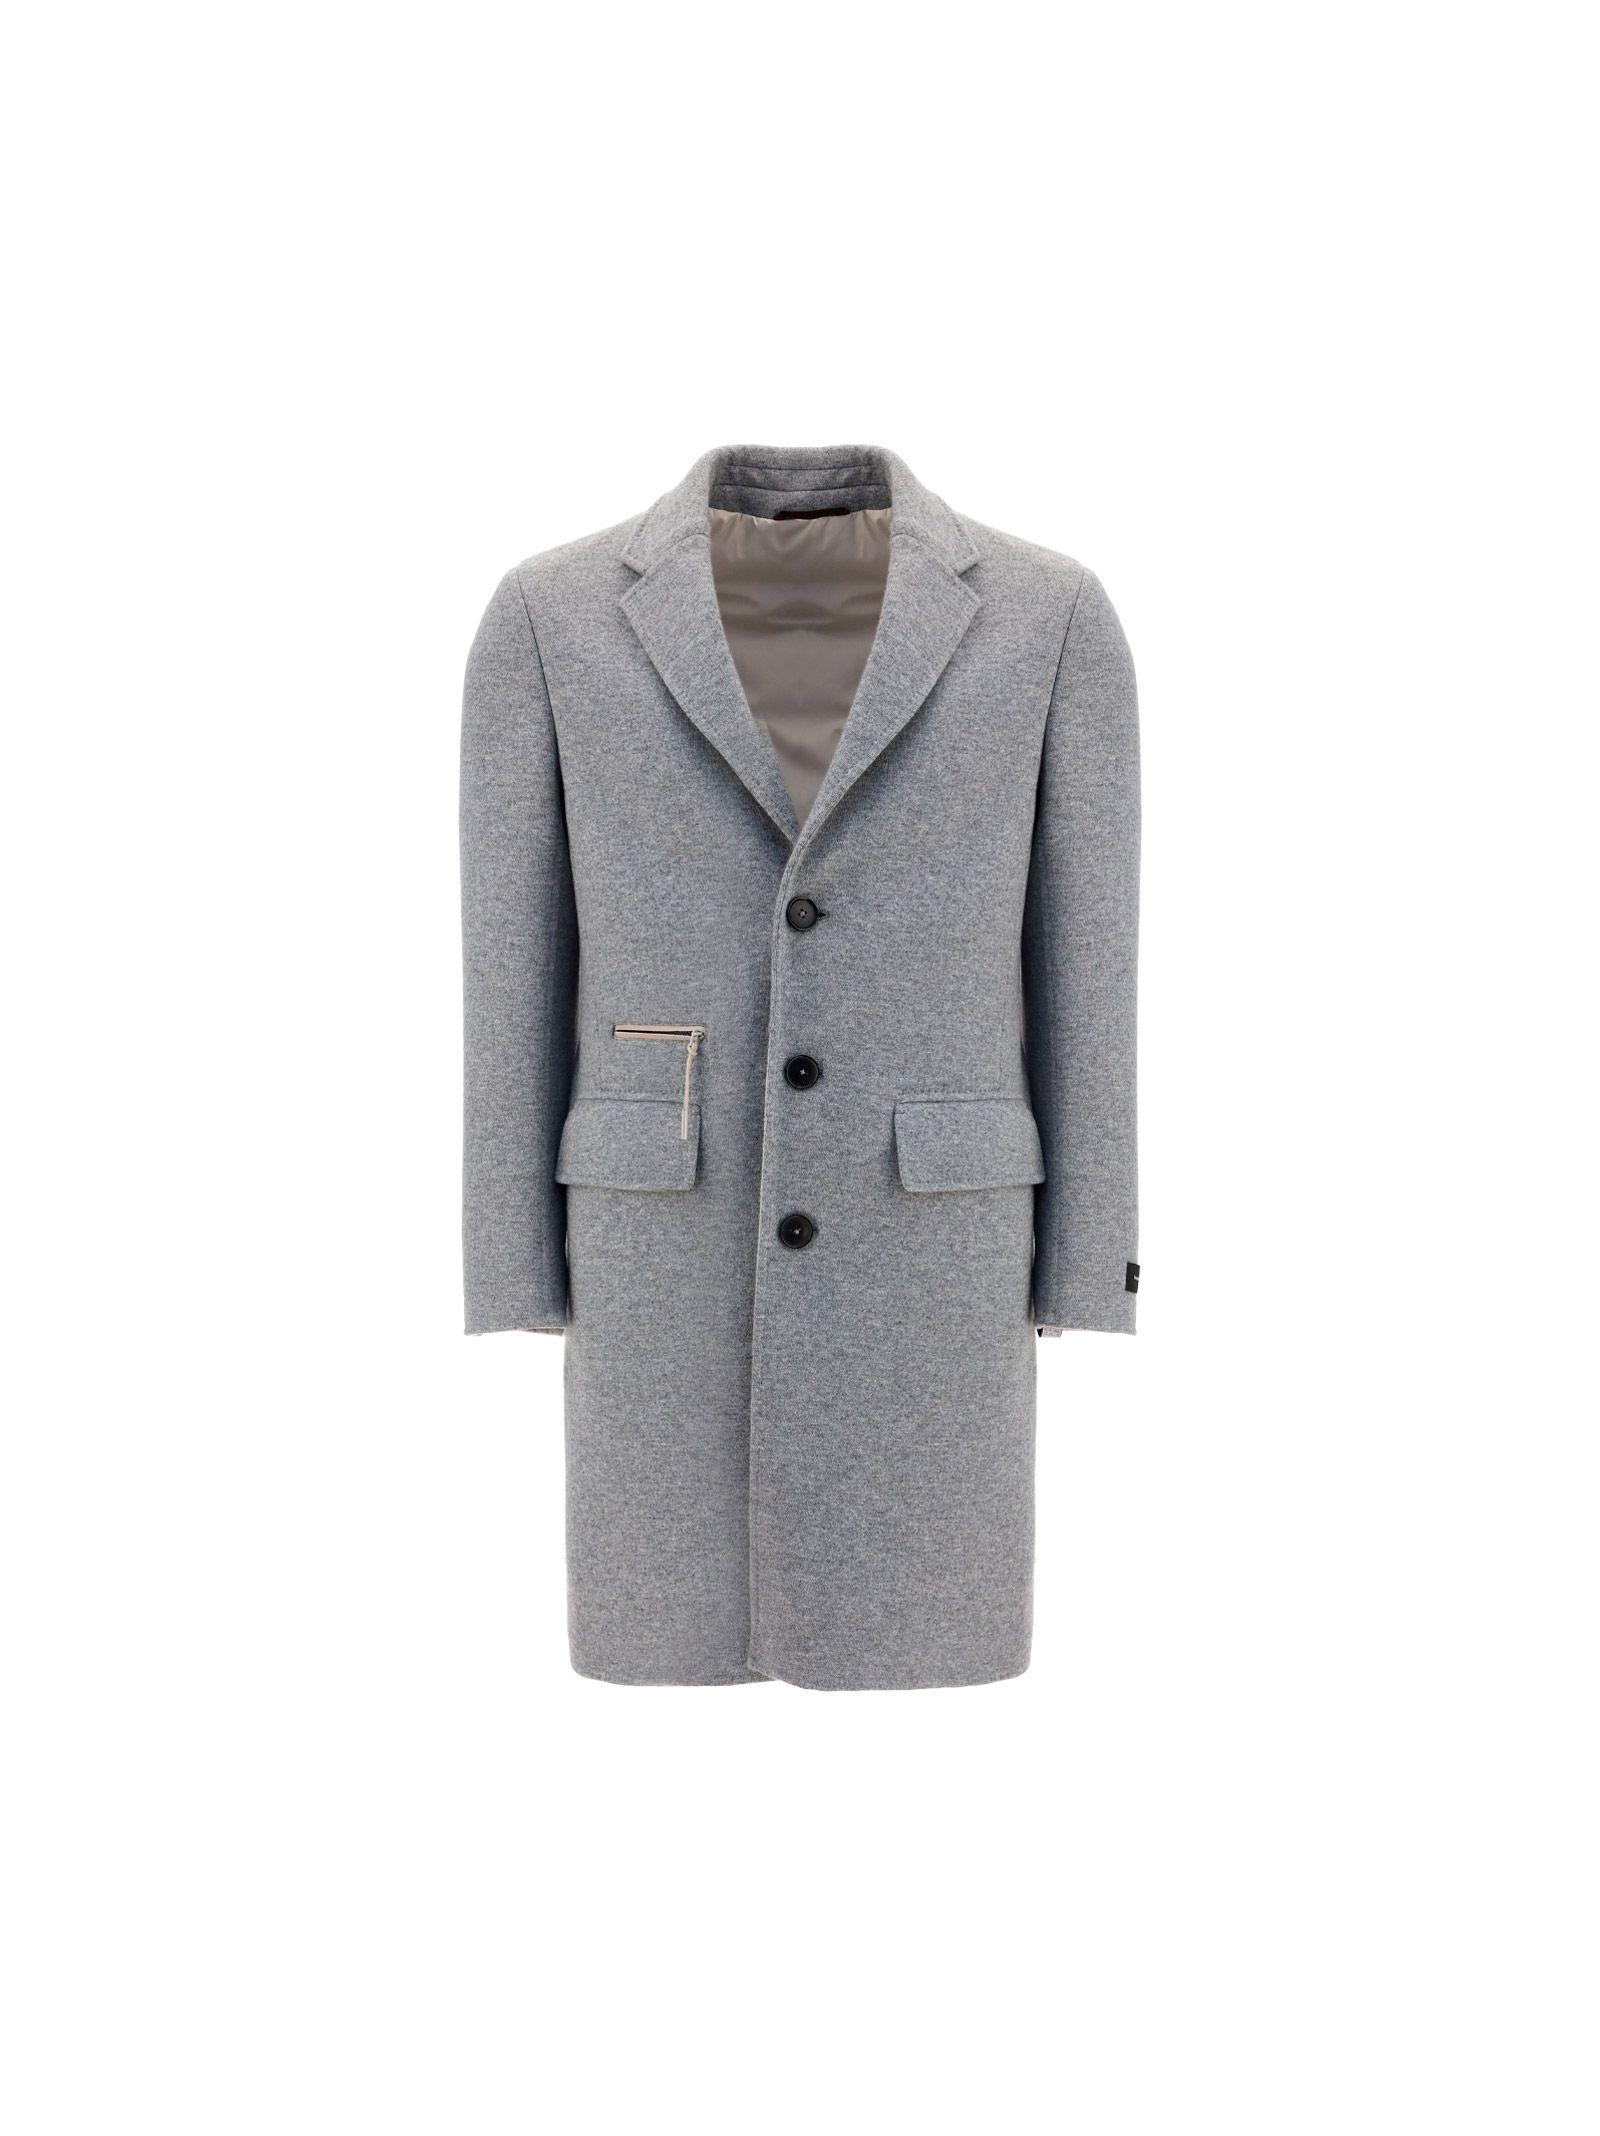 Spitalfields Clothing Co Wool Coat Online, SAVE 51% - eagleflair.com